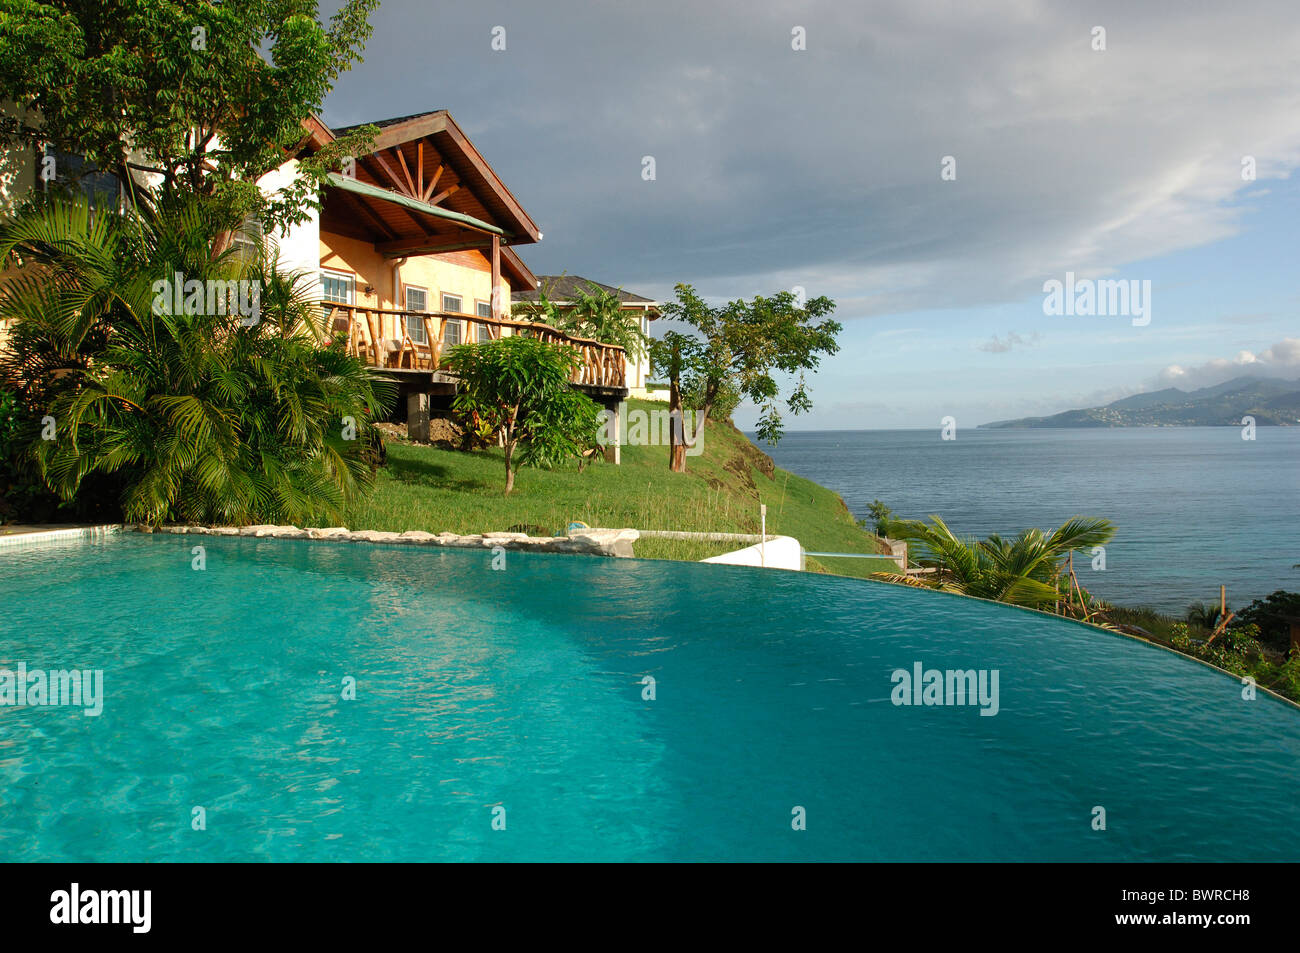 Grenada Maca Bana Villen Karibik Insel Schwimmbad Hotel Resort Gebäude Haus Palm trees Tourismus Trave Stockfoto